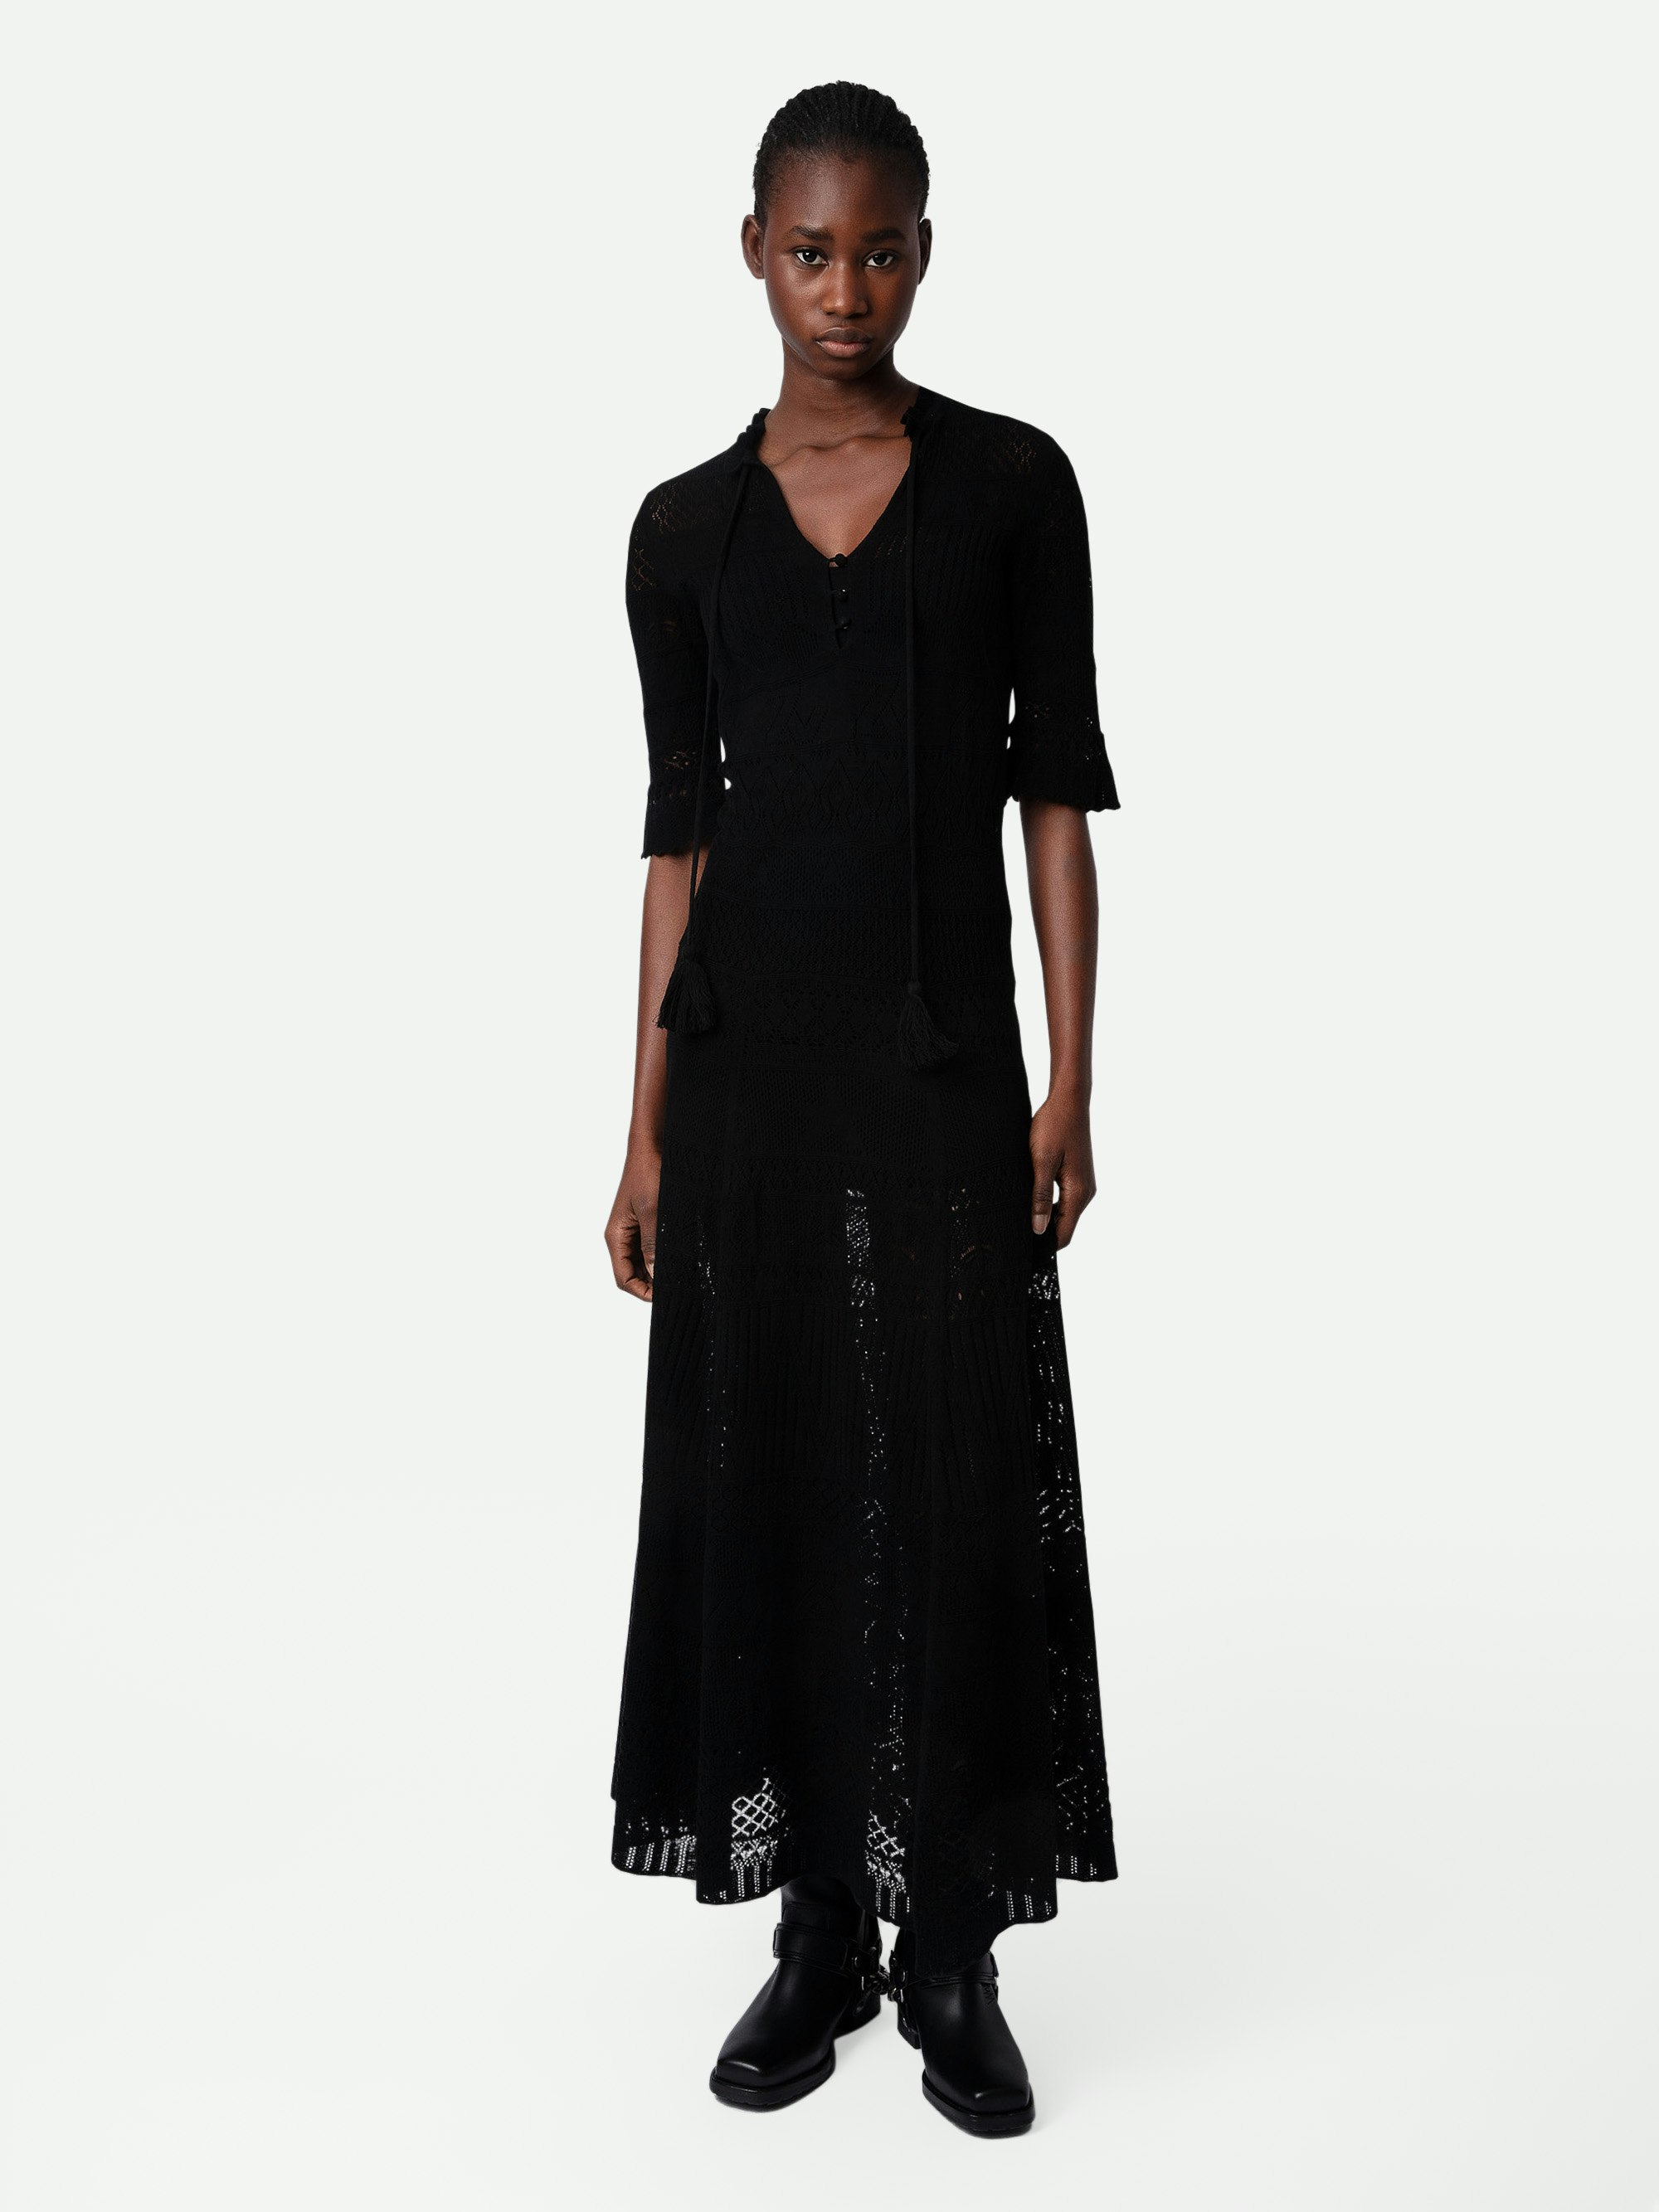 Memphis Dress - Women's black cotton crochet long dress with pointelle detailing and tassel ties.